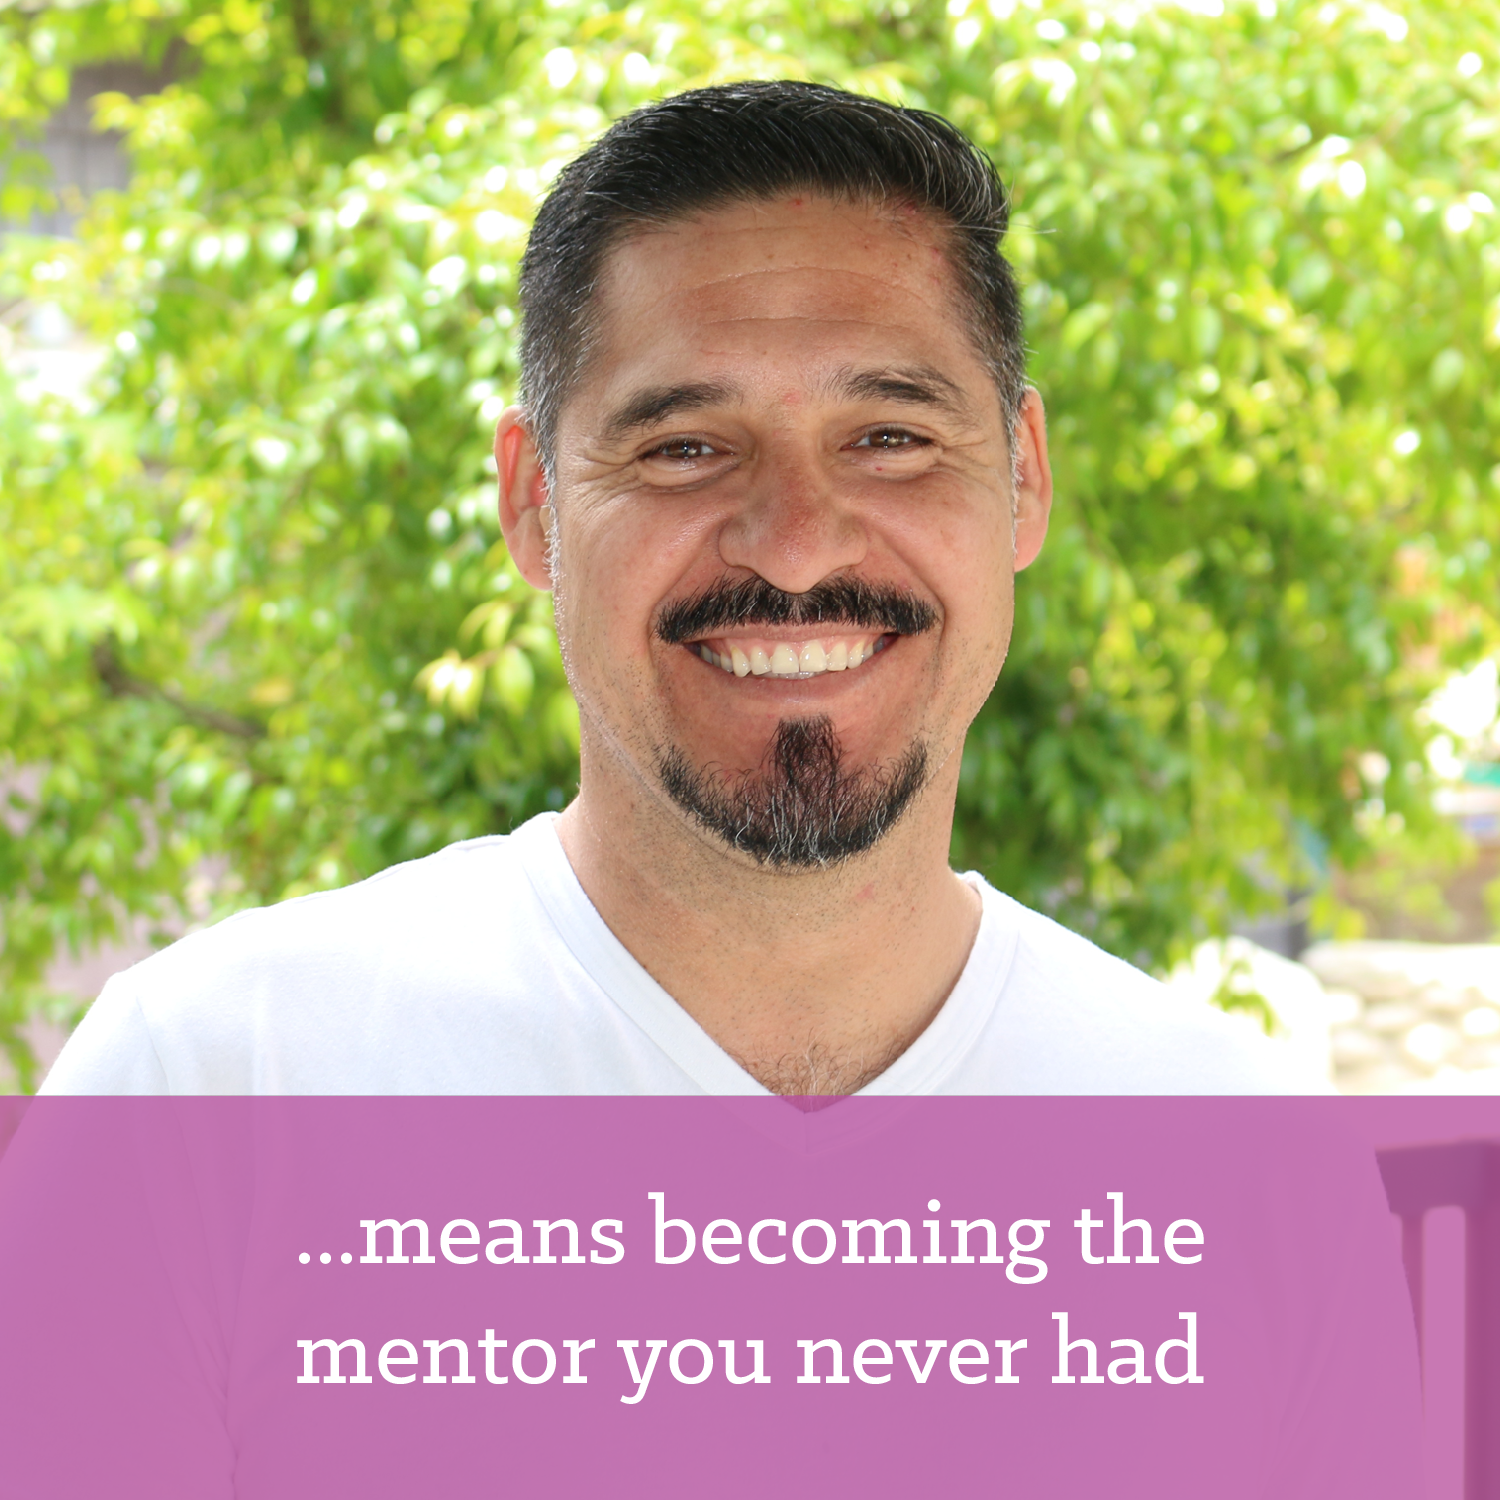 Becoming a mentor